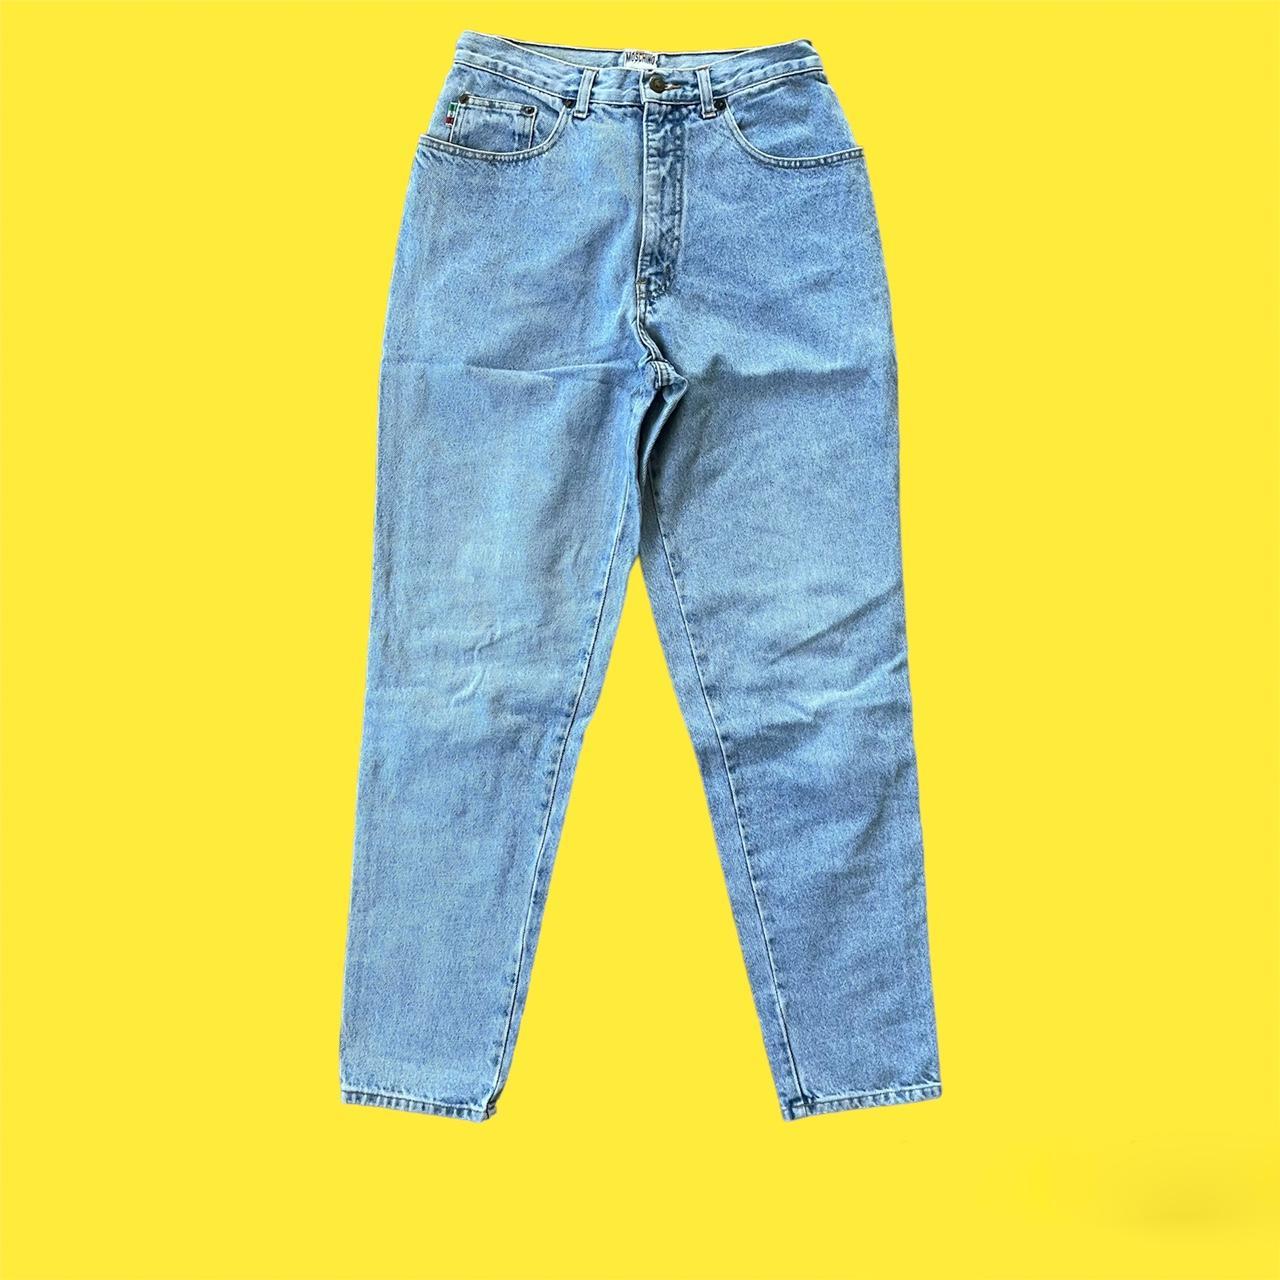 Moschino Men's Blue Jeans | Depop